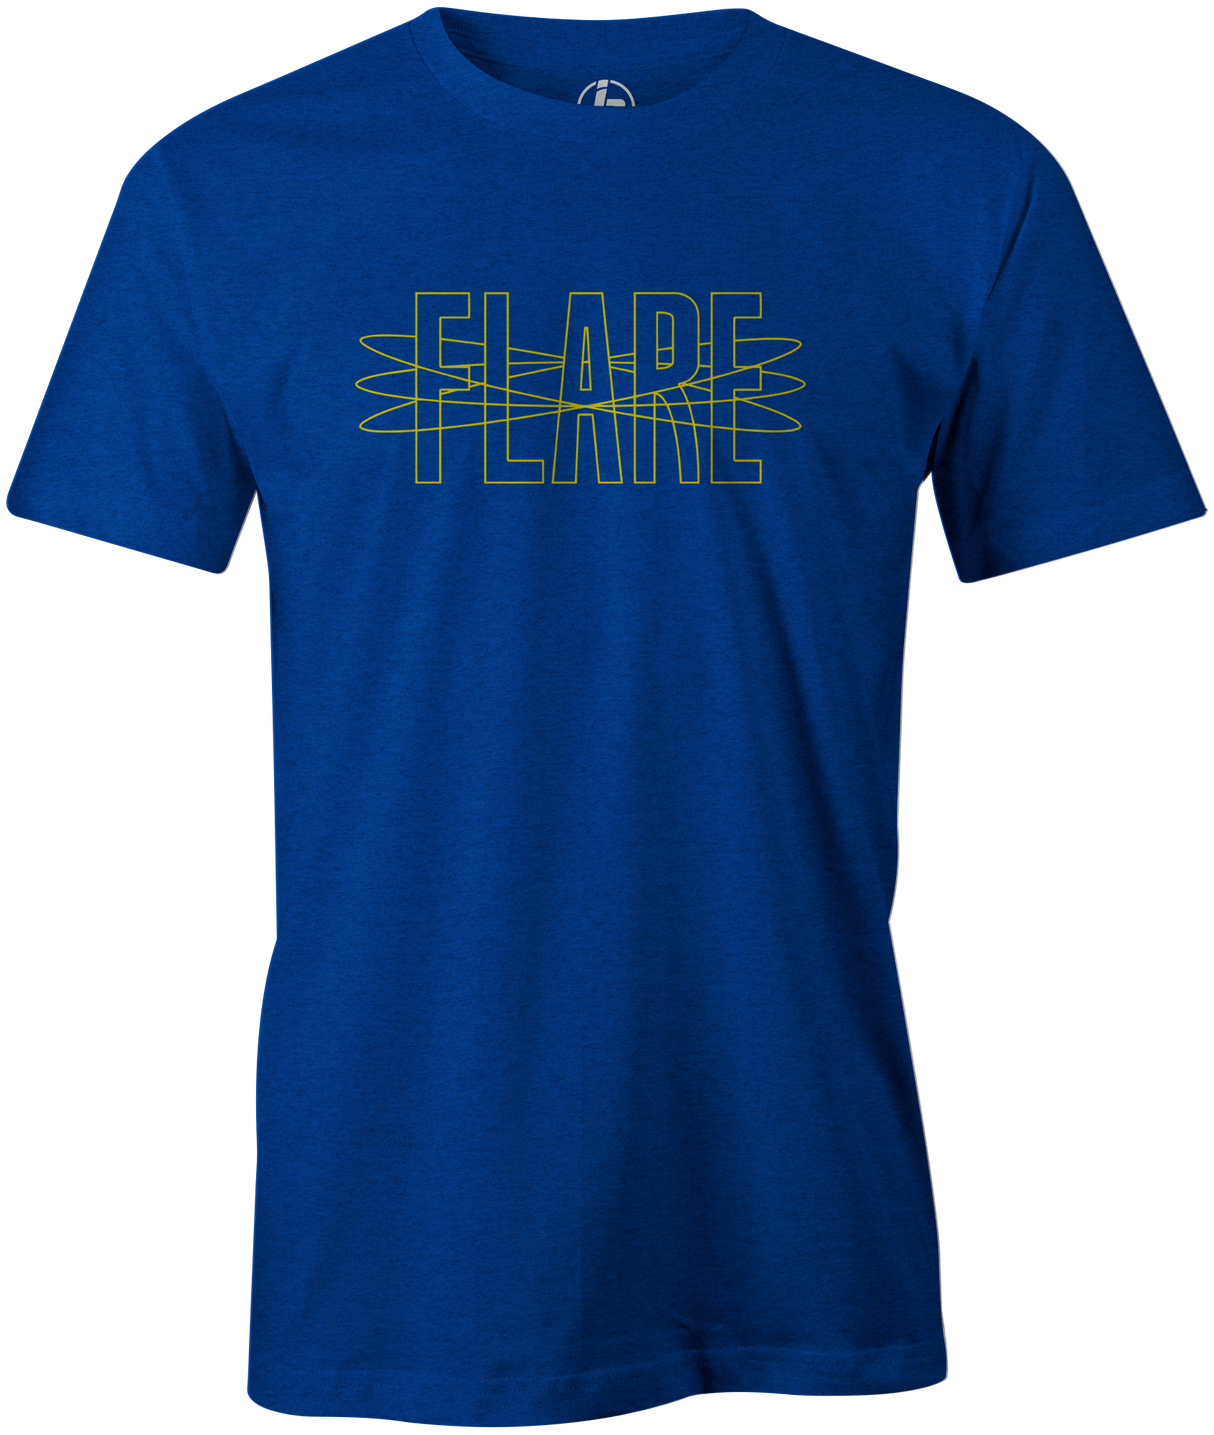 Track Flare Men's T-Shirt, Blue, track bowling, bowling ball, bowling ball logo, track, retro, old school, throwback, vintage, tshirt, tee, tee-shirt, tee shirt.